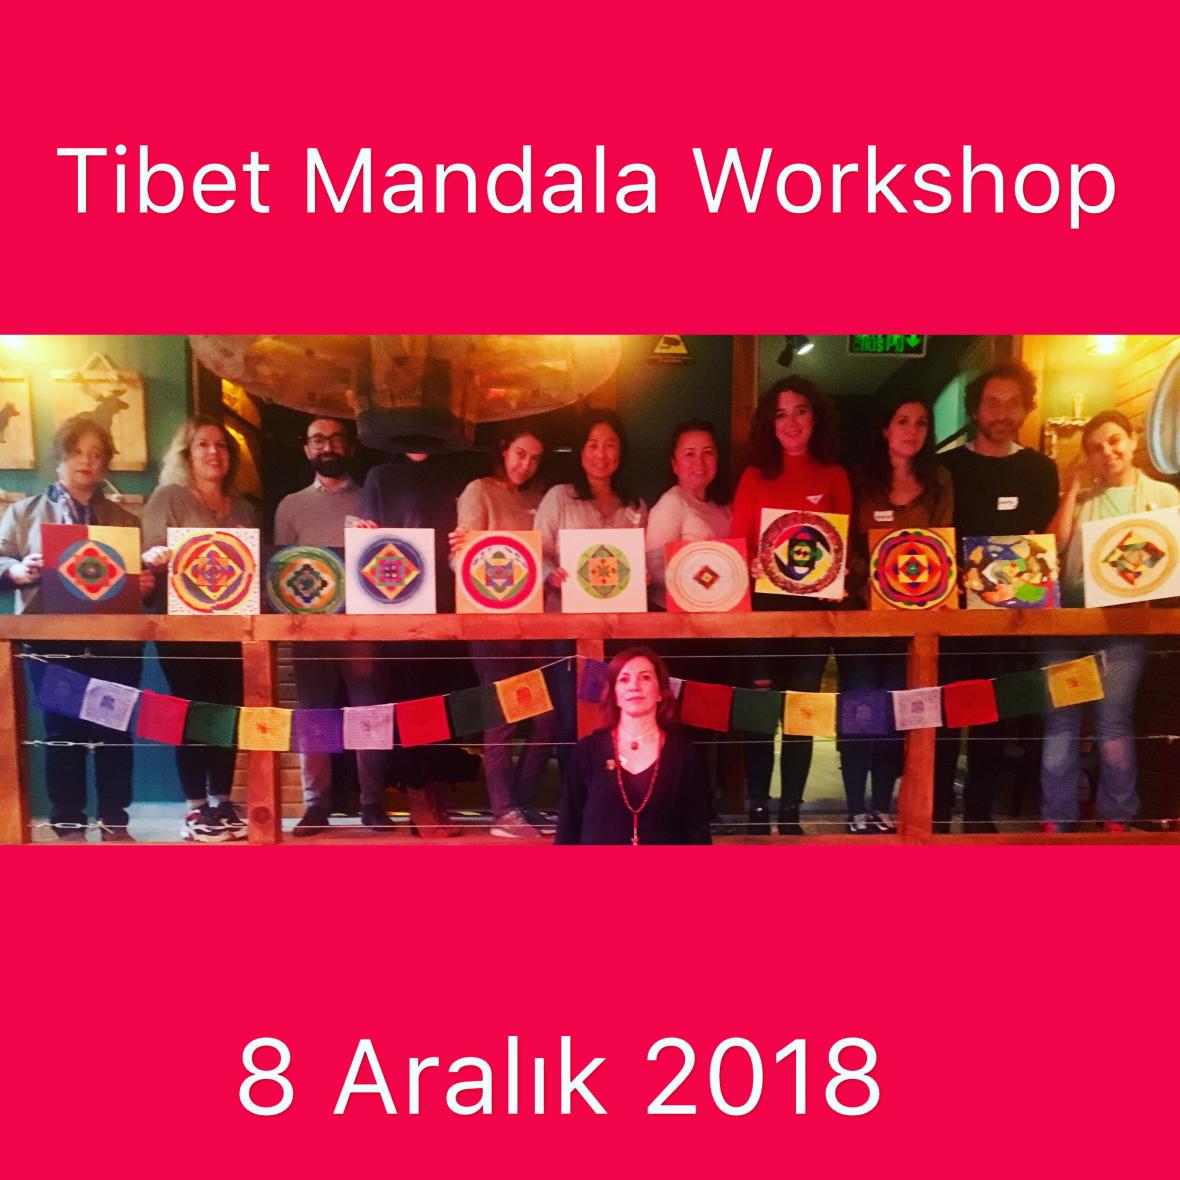 Tibet Mandala Workshop